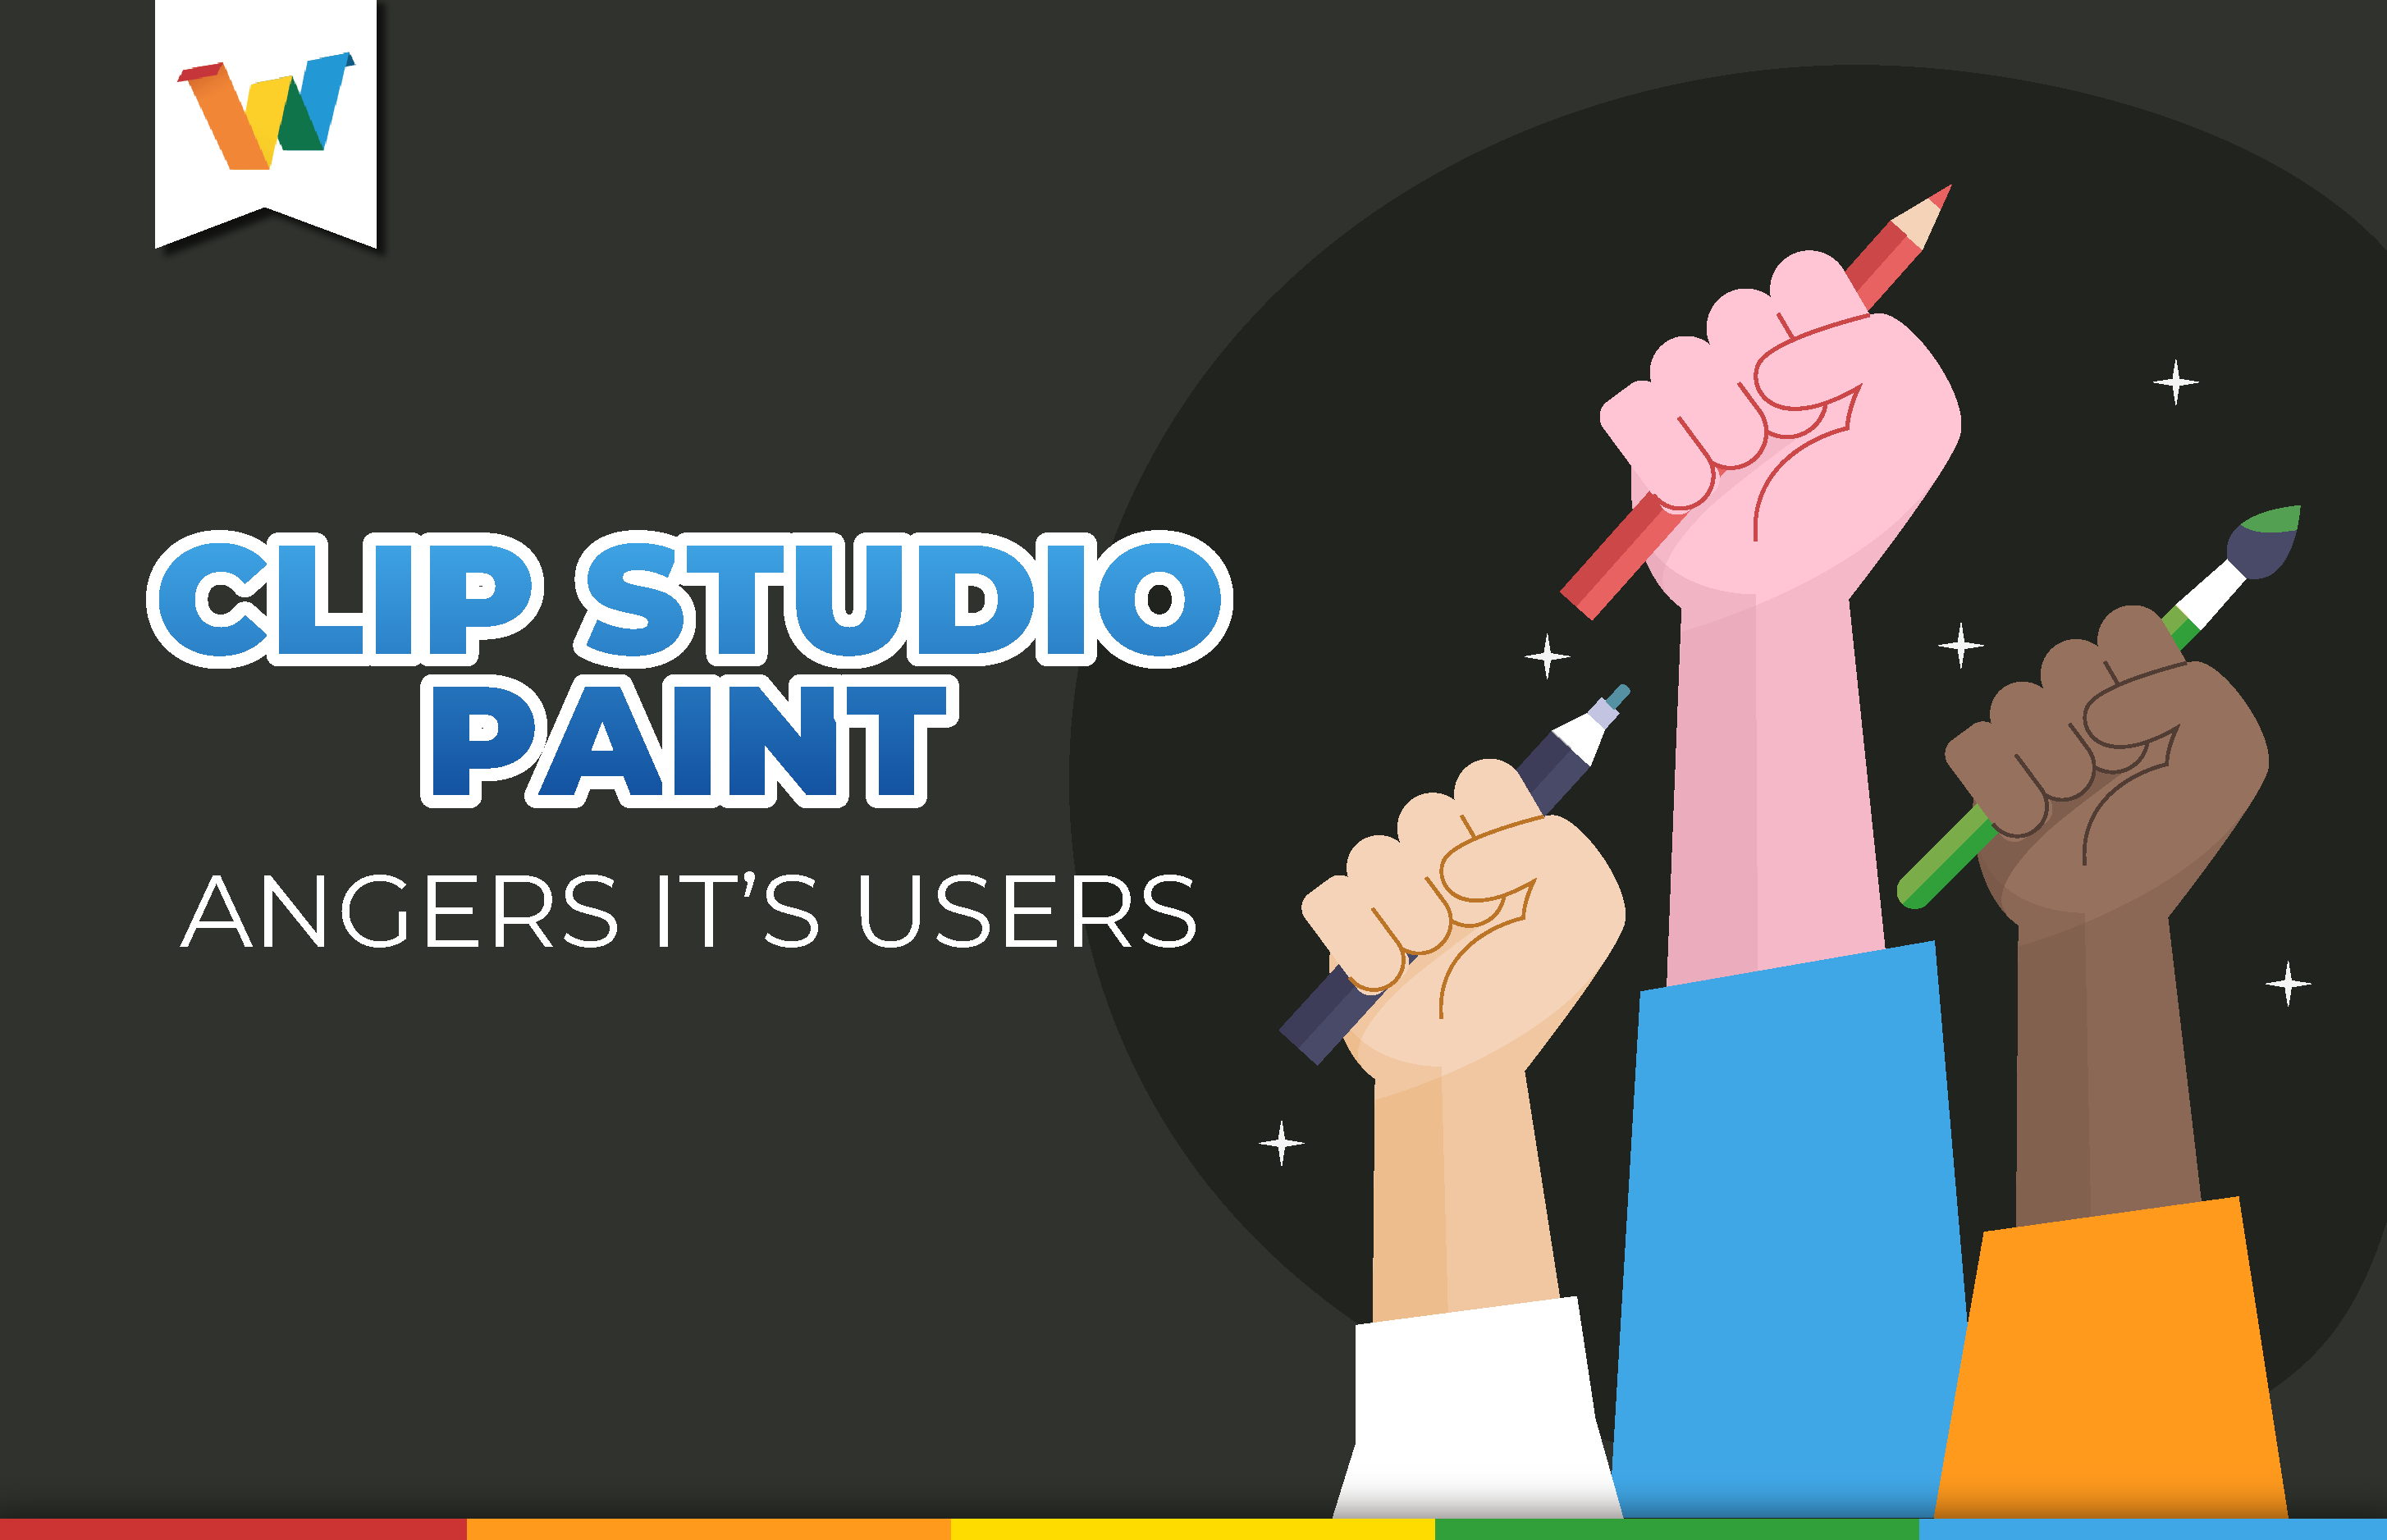 Clip studio paint angers it's users